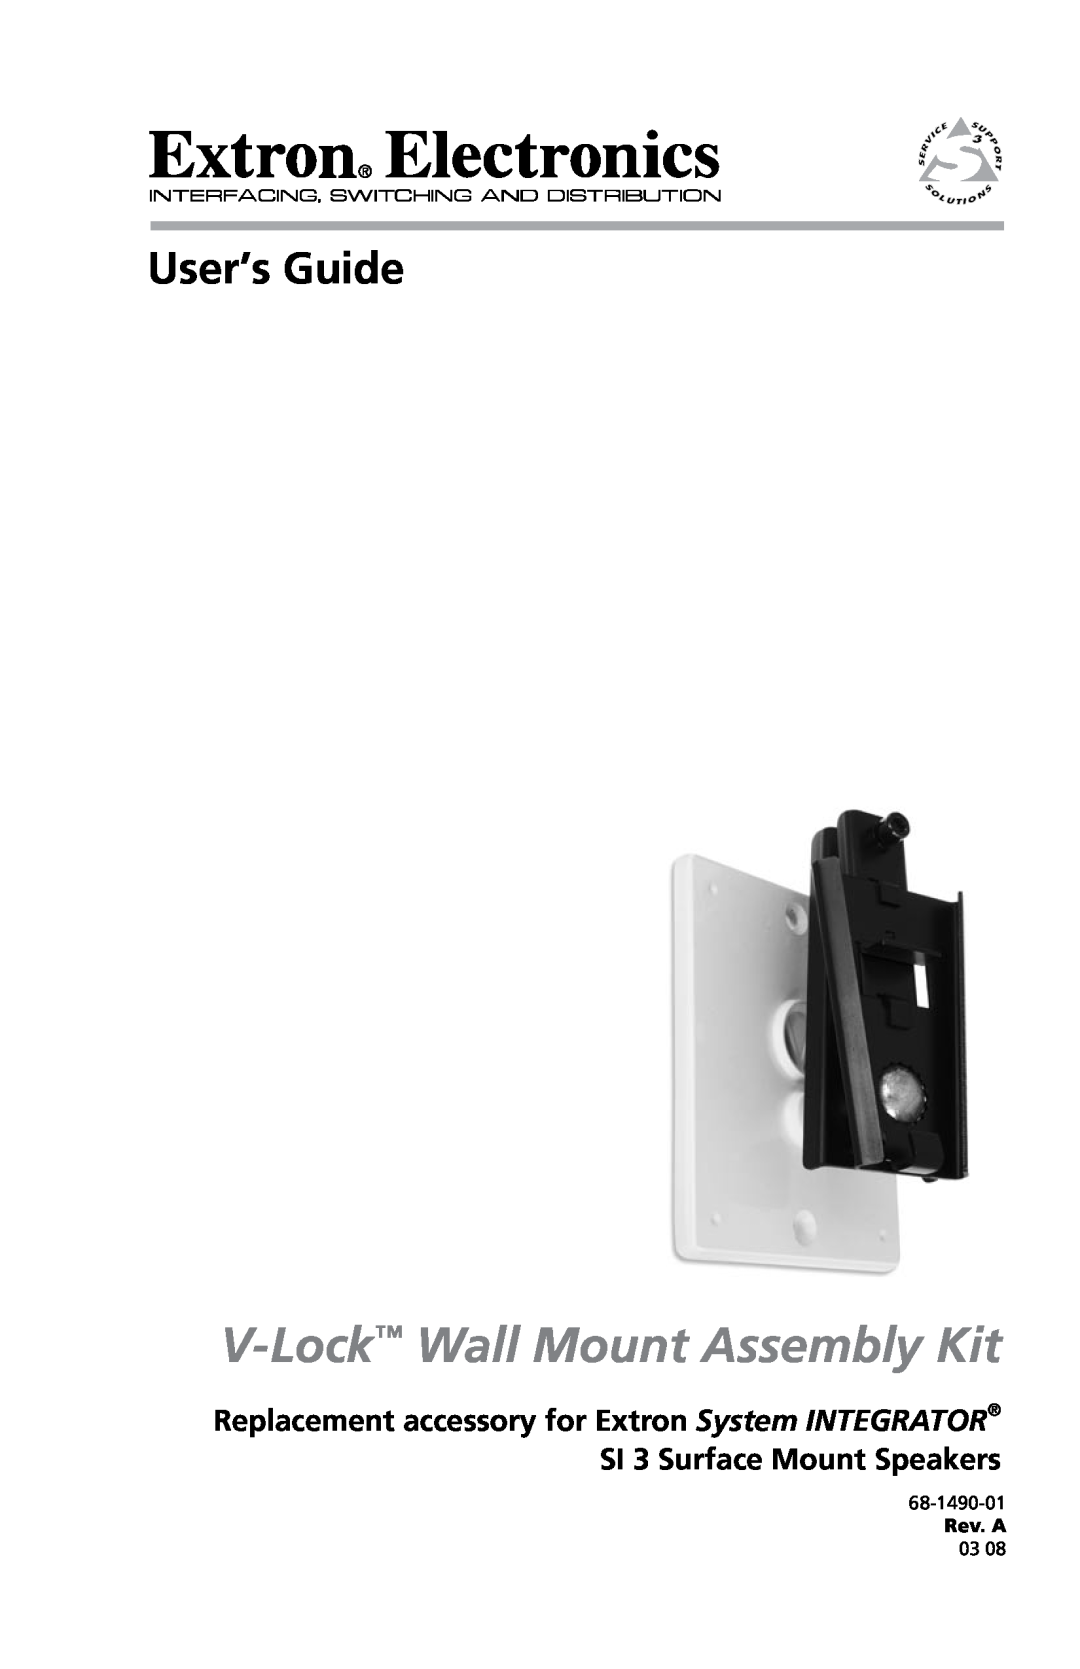 Extron electronic V-LockTM manual V-Lock Wall Mount Assembly Kit, User’s Guide, 68-1490-01, Rev. A 